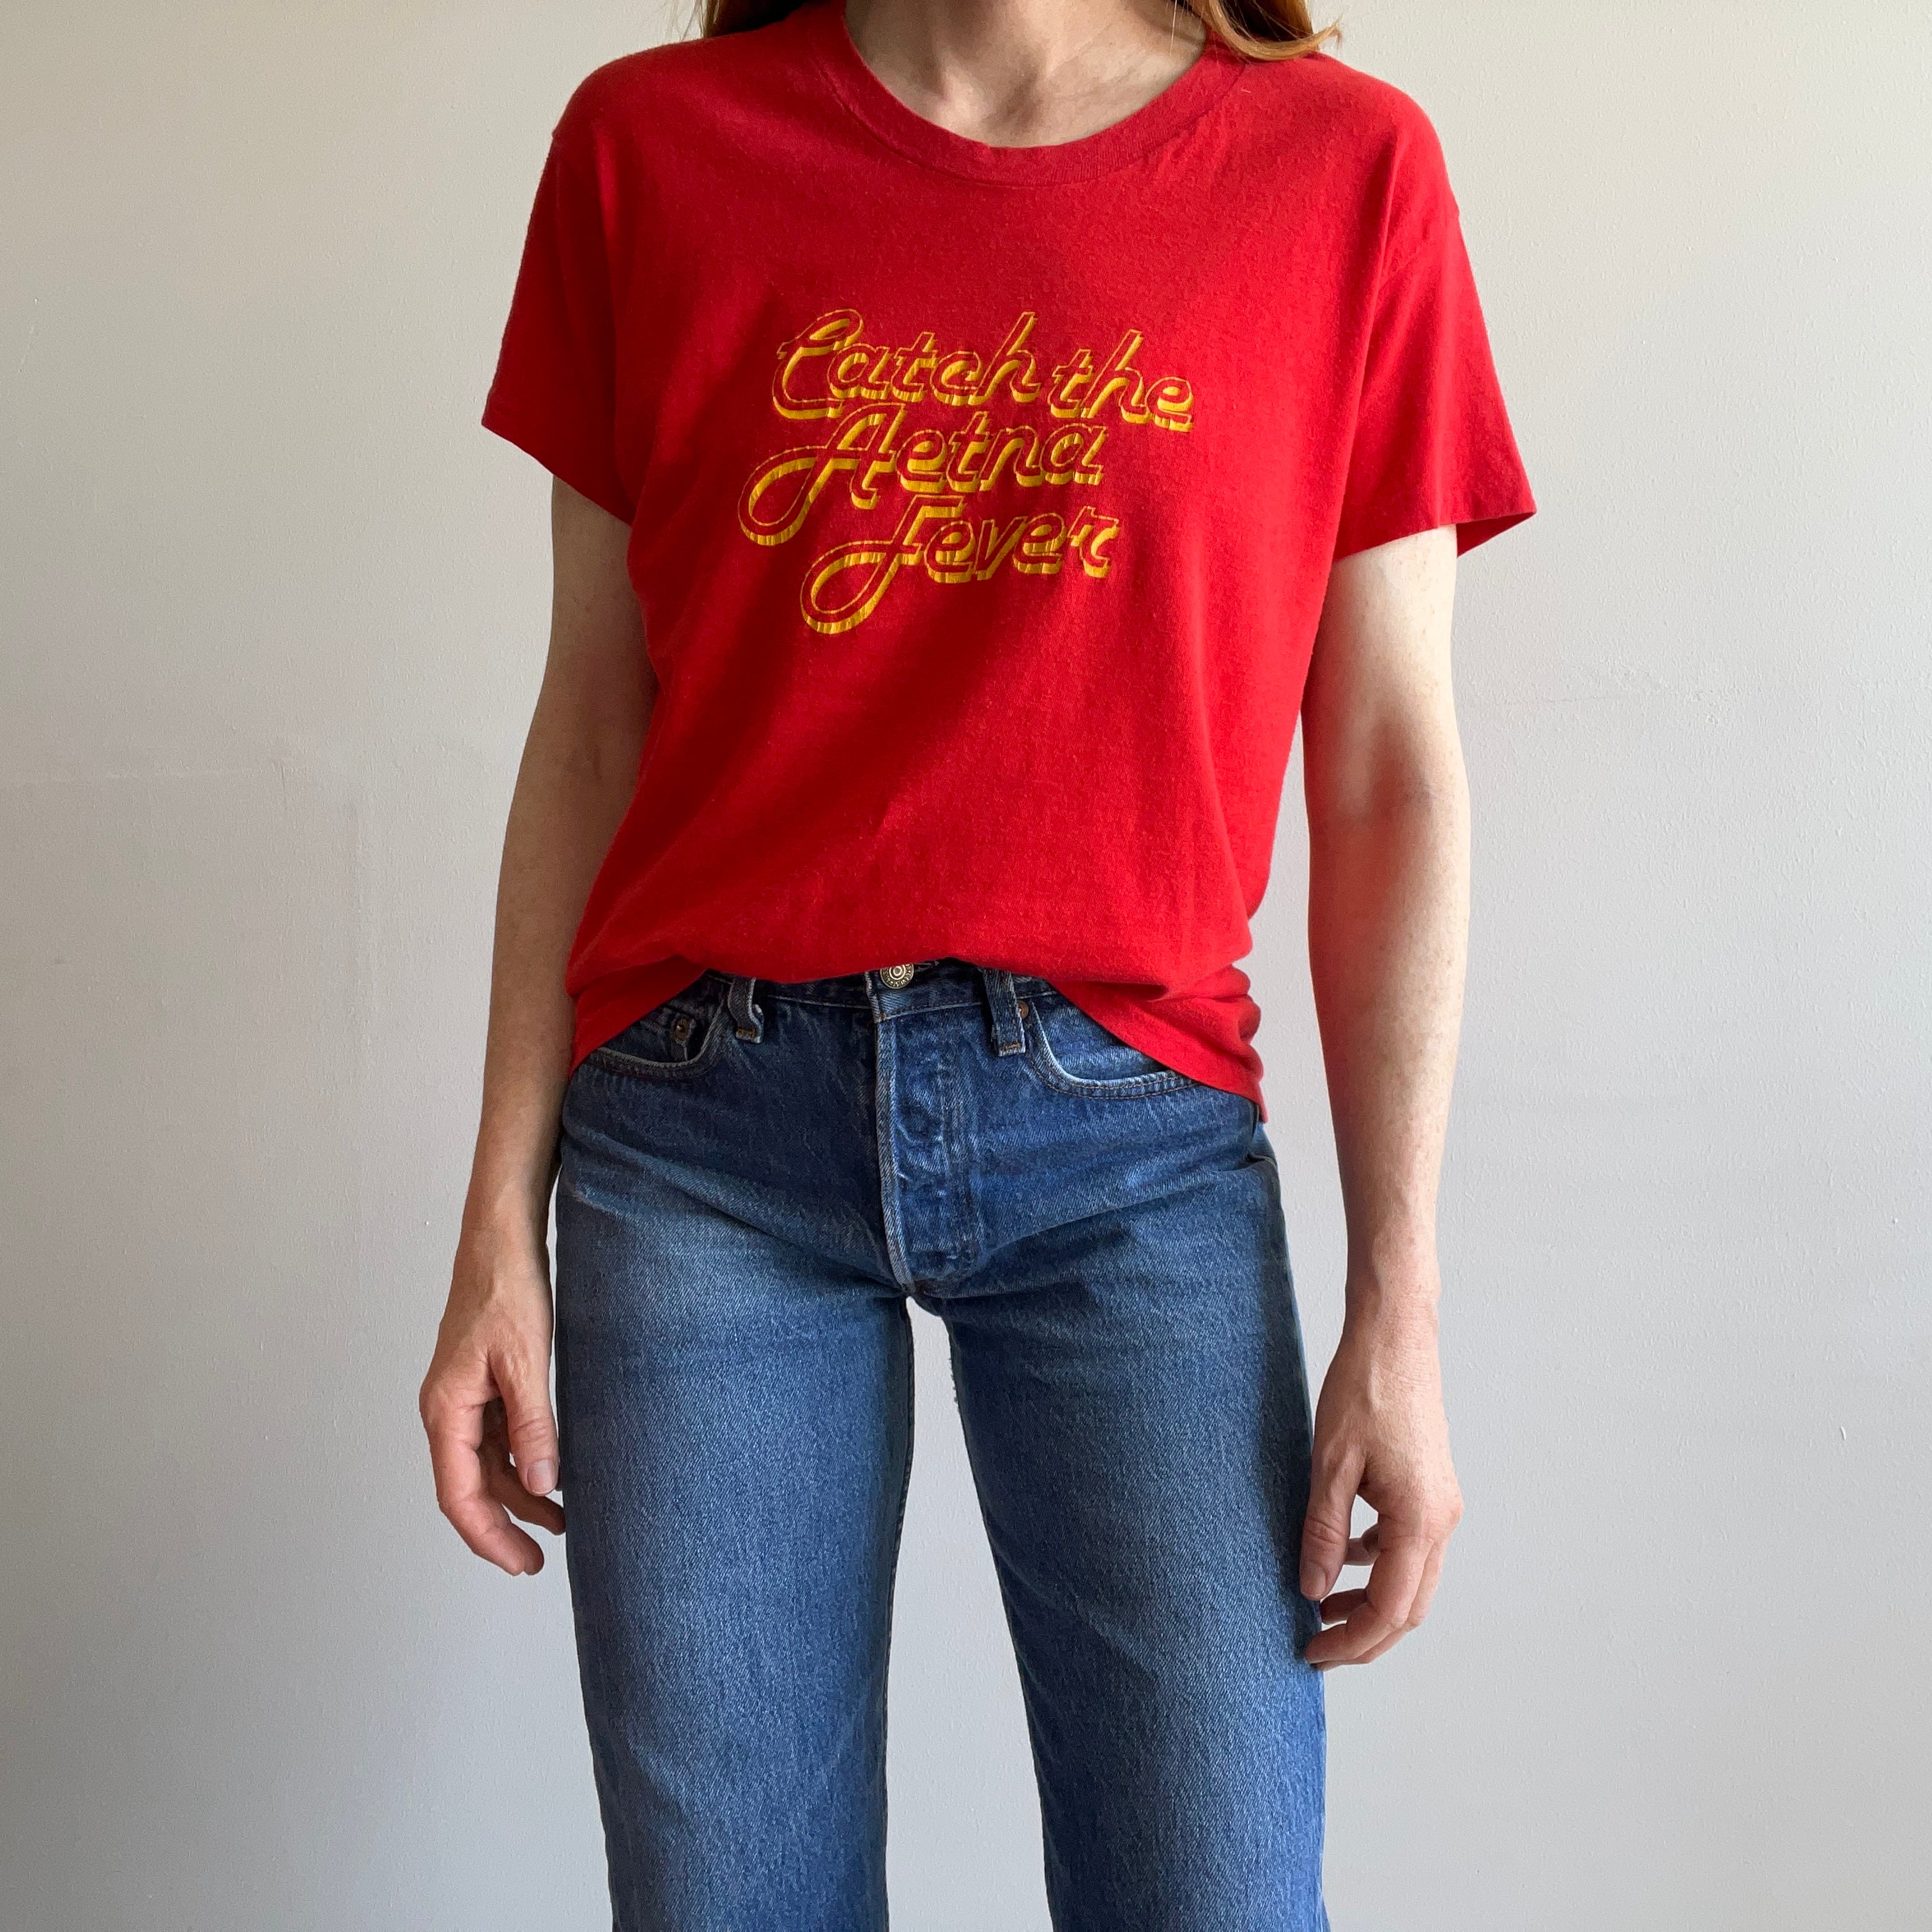 1970s Catch The Aetna Fever Super Duper Soft T-Shirt